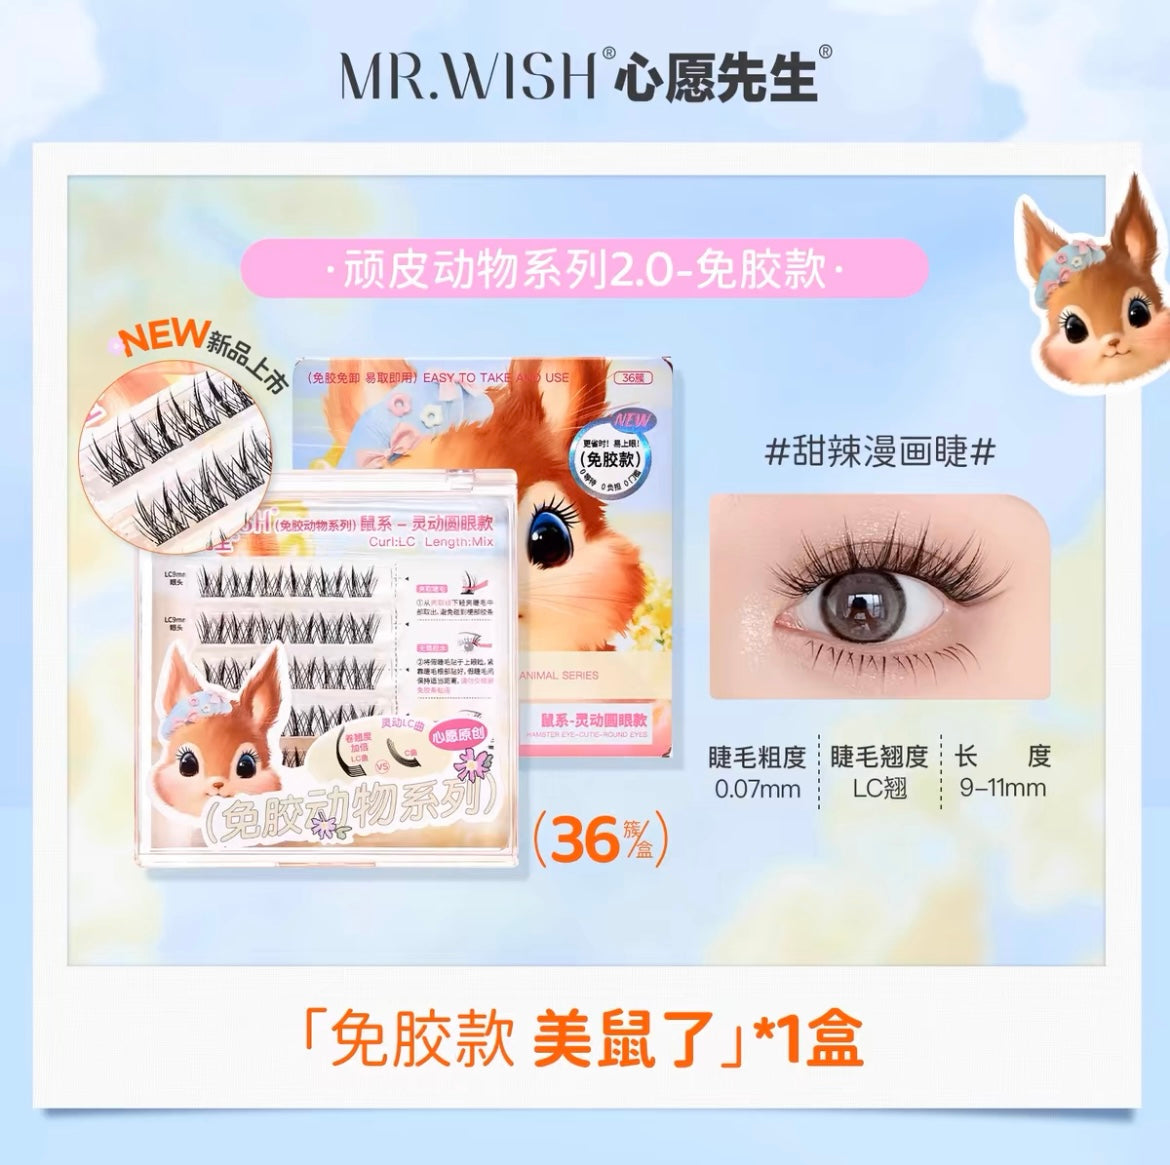 MR.WISH Glue-Free/Glue-On Animal Series False Eyelashes 1 Box 心愿先生免胶款动物系列假睫毛